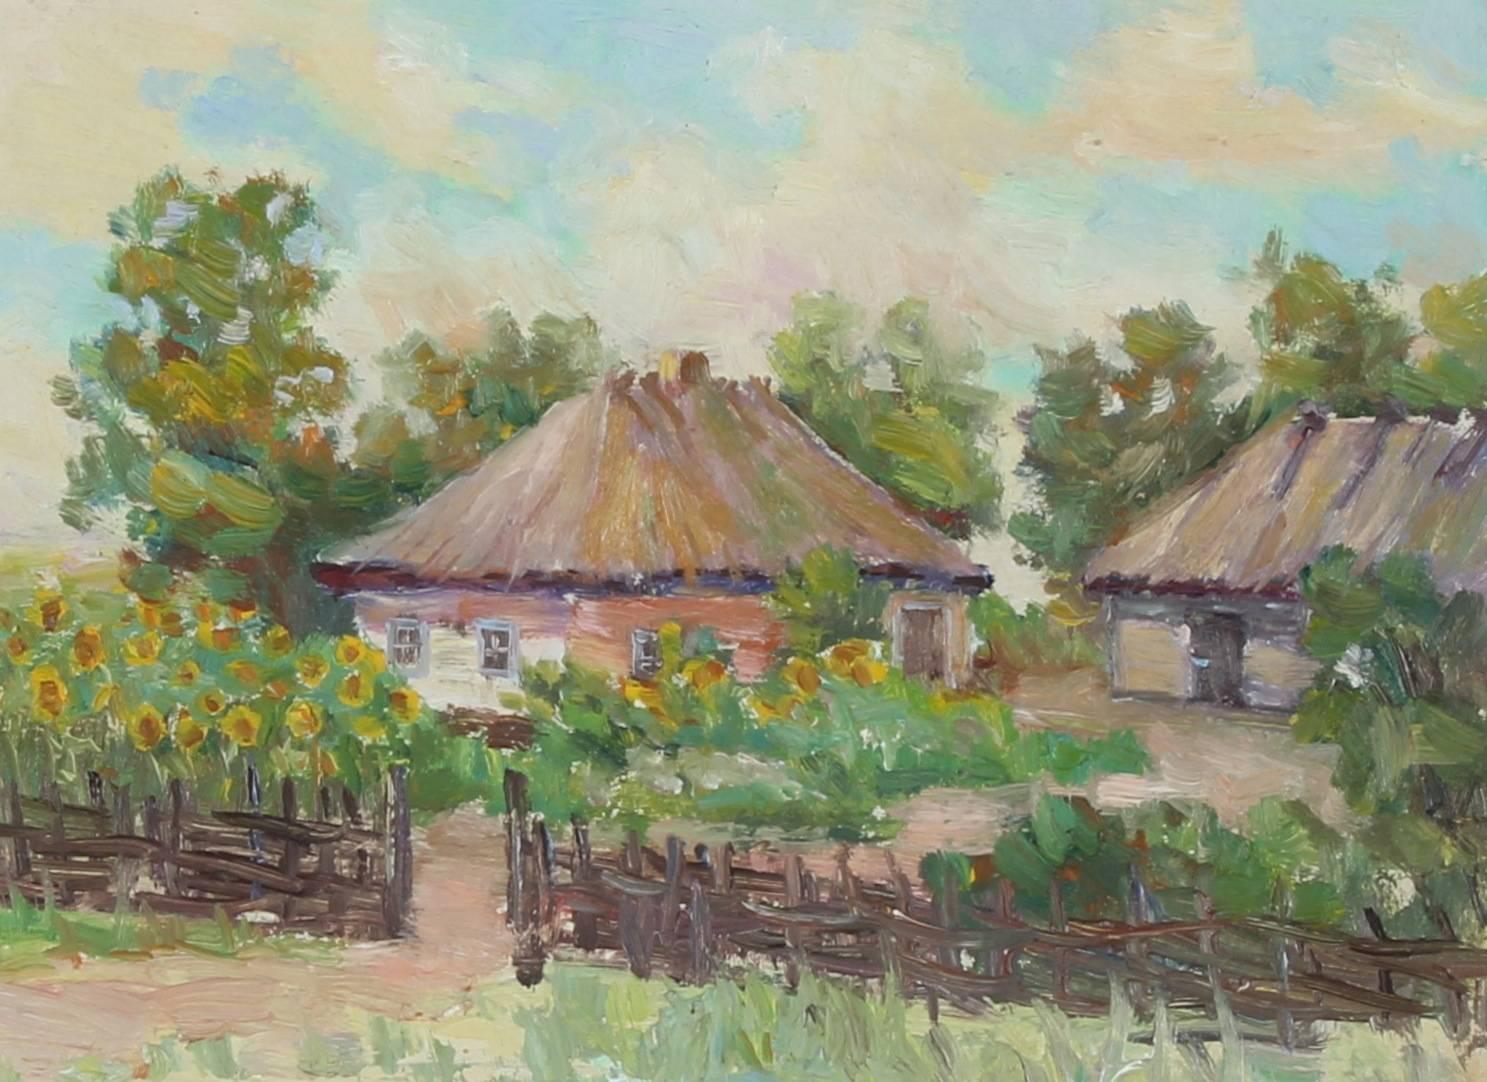 Soviet Impressionist Cottages, Oil on Paper, 1960 - Painting by Vasili Brenin